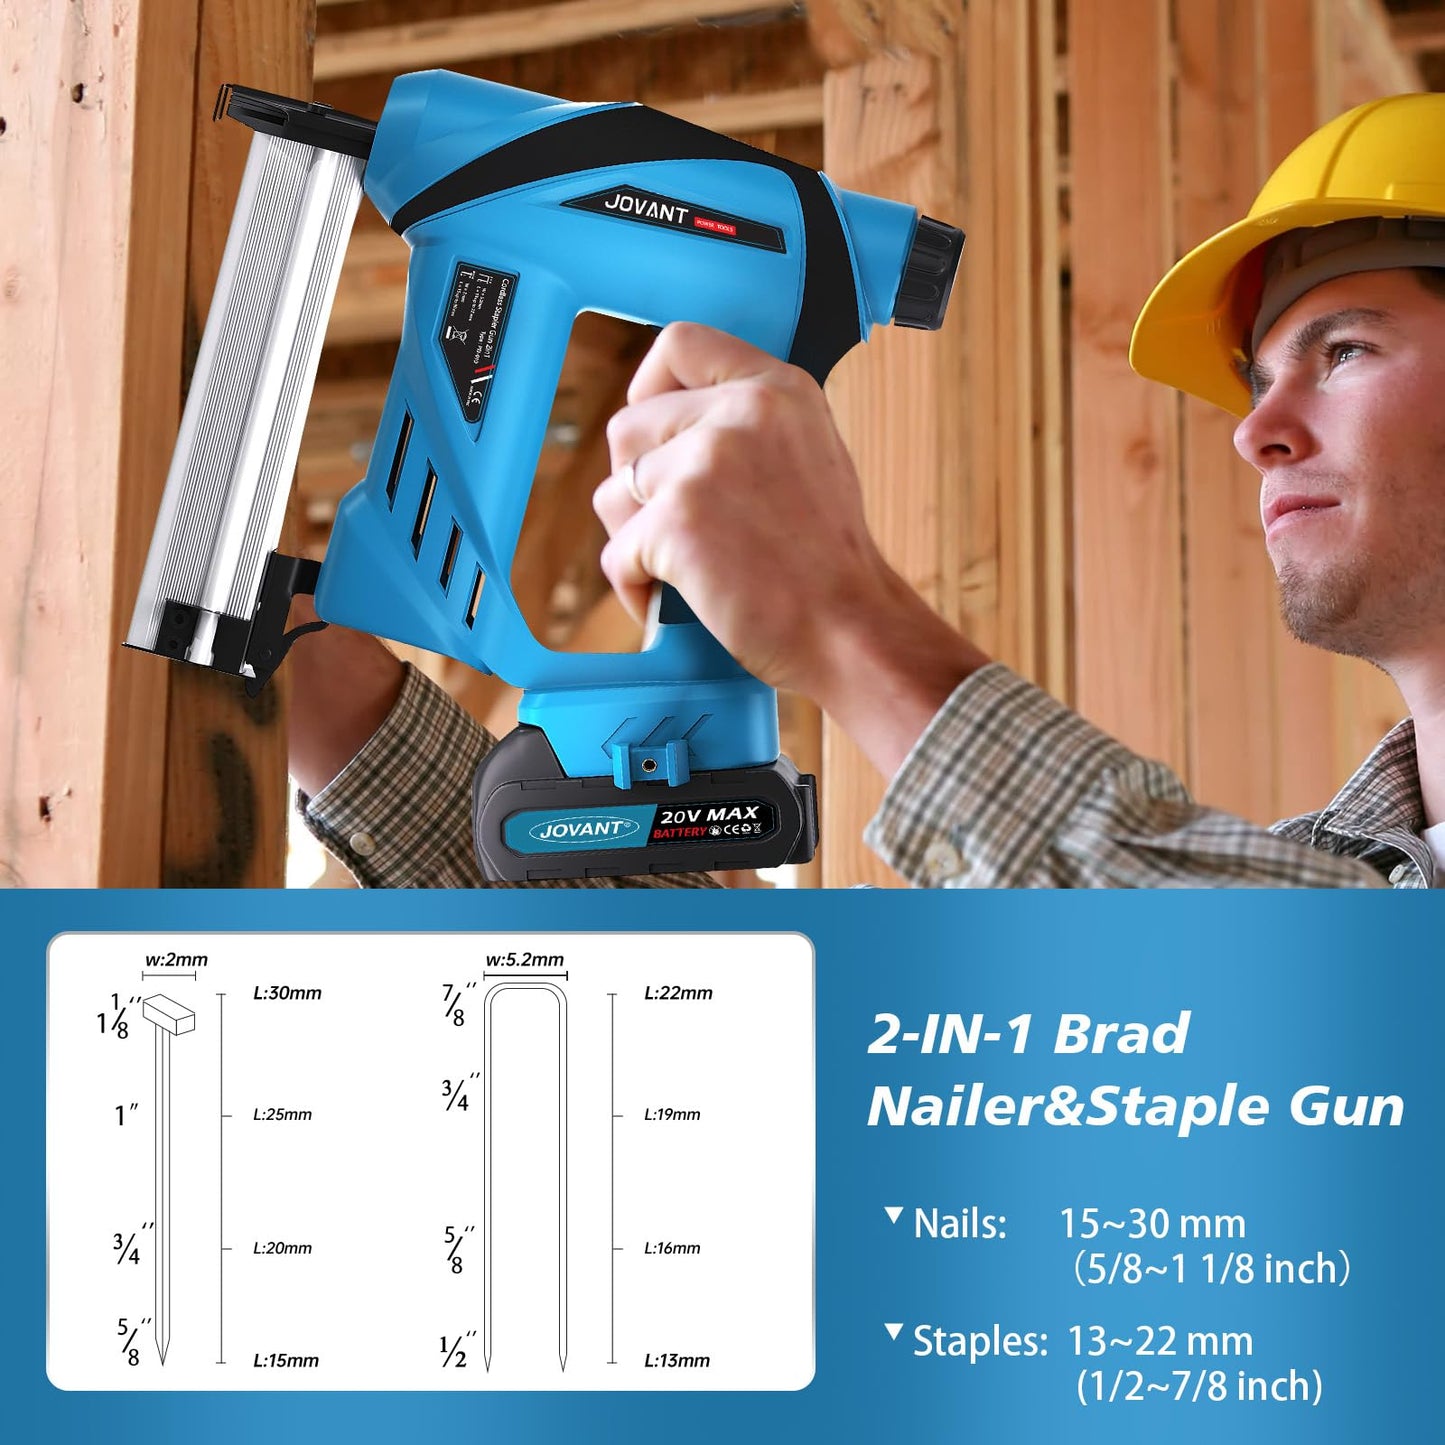 2-IN-1 Brad Nailer&Staple Gun Nails: 15~30 mm (5/8~1 1/8 inch)  Staples: 13~22 mm (1/2~7/8 inch)